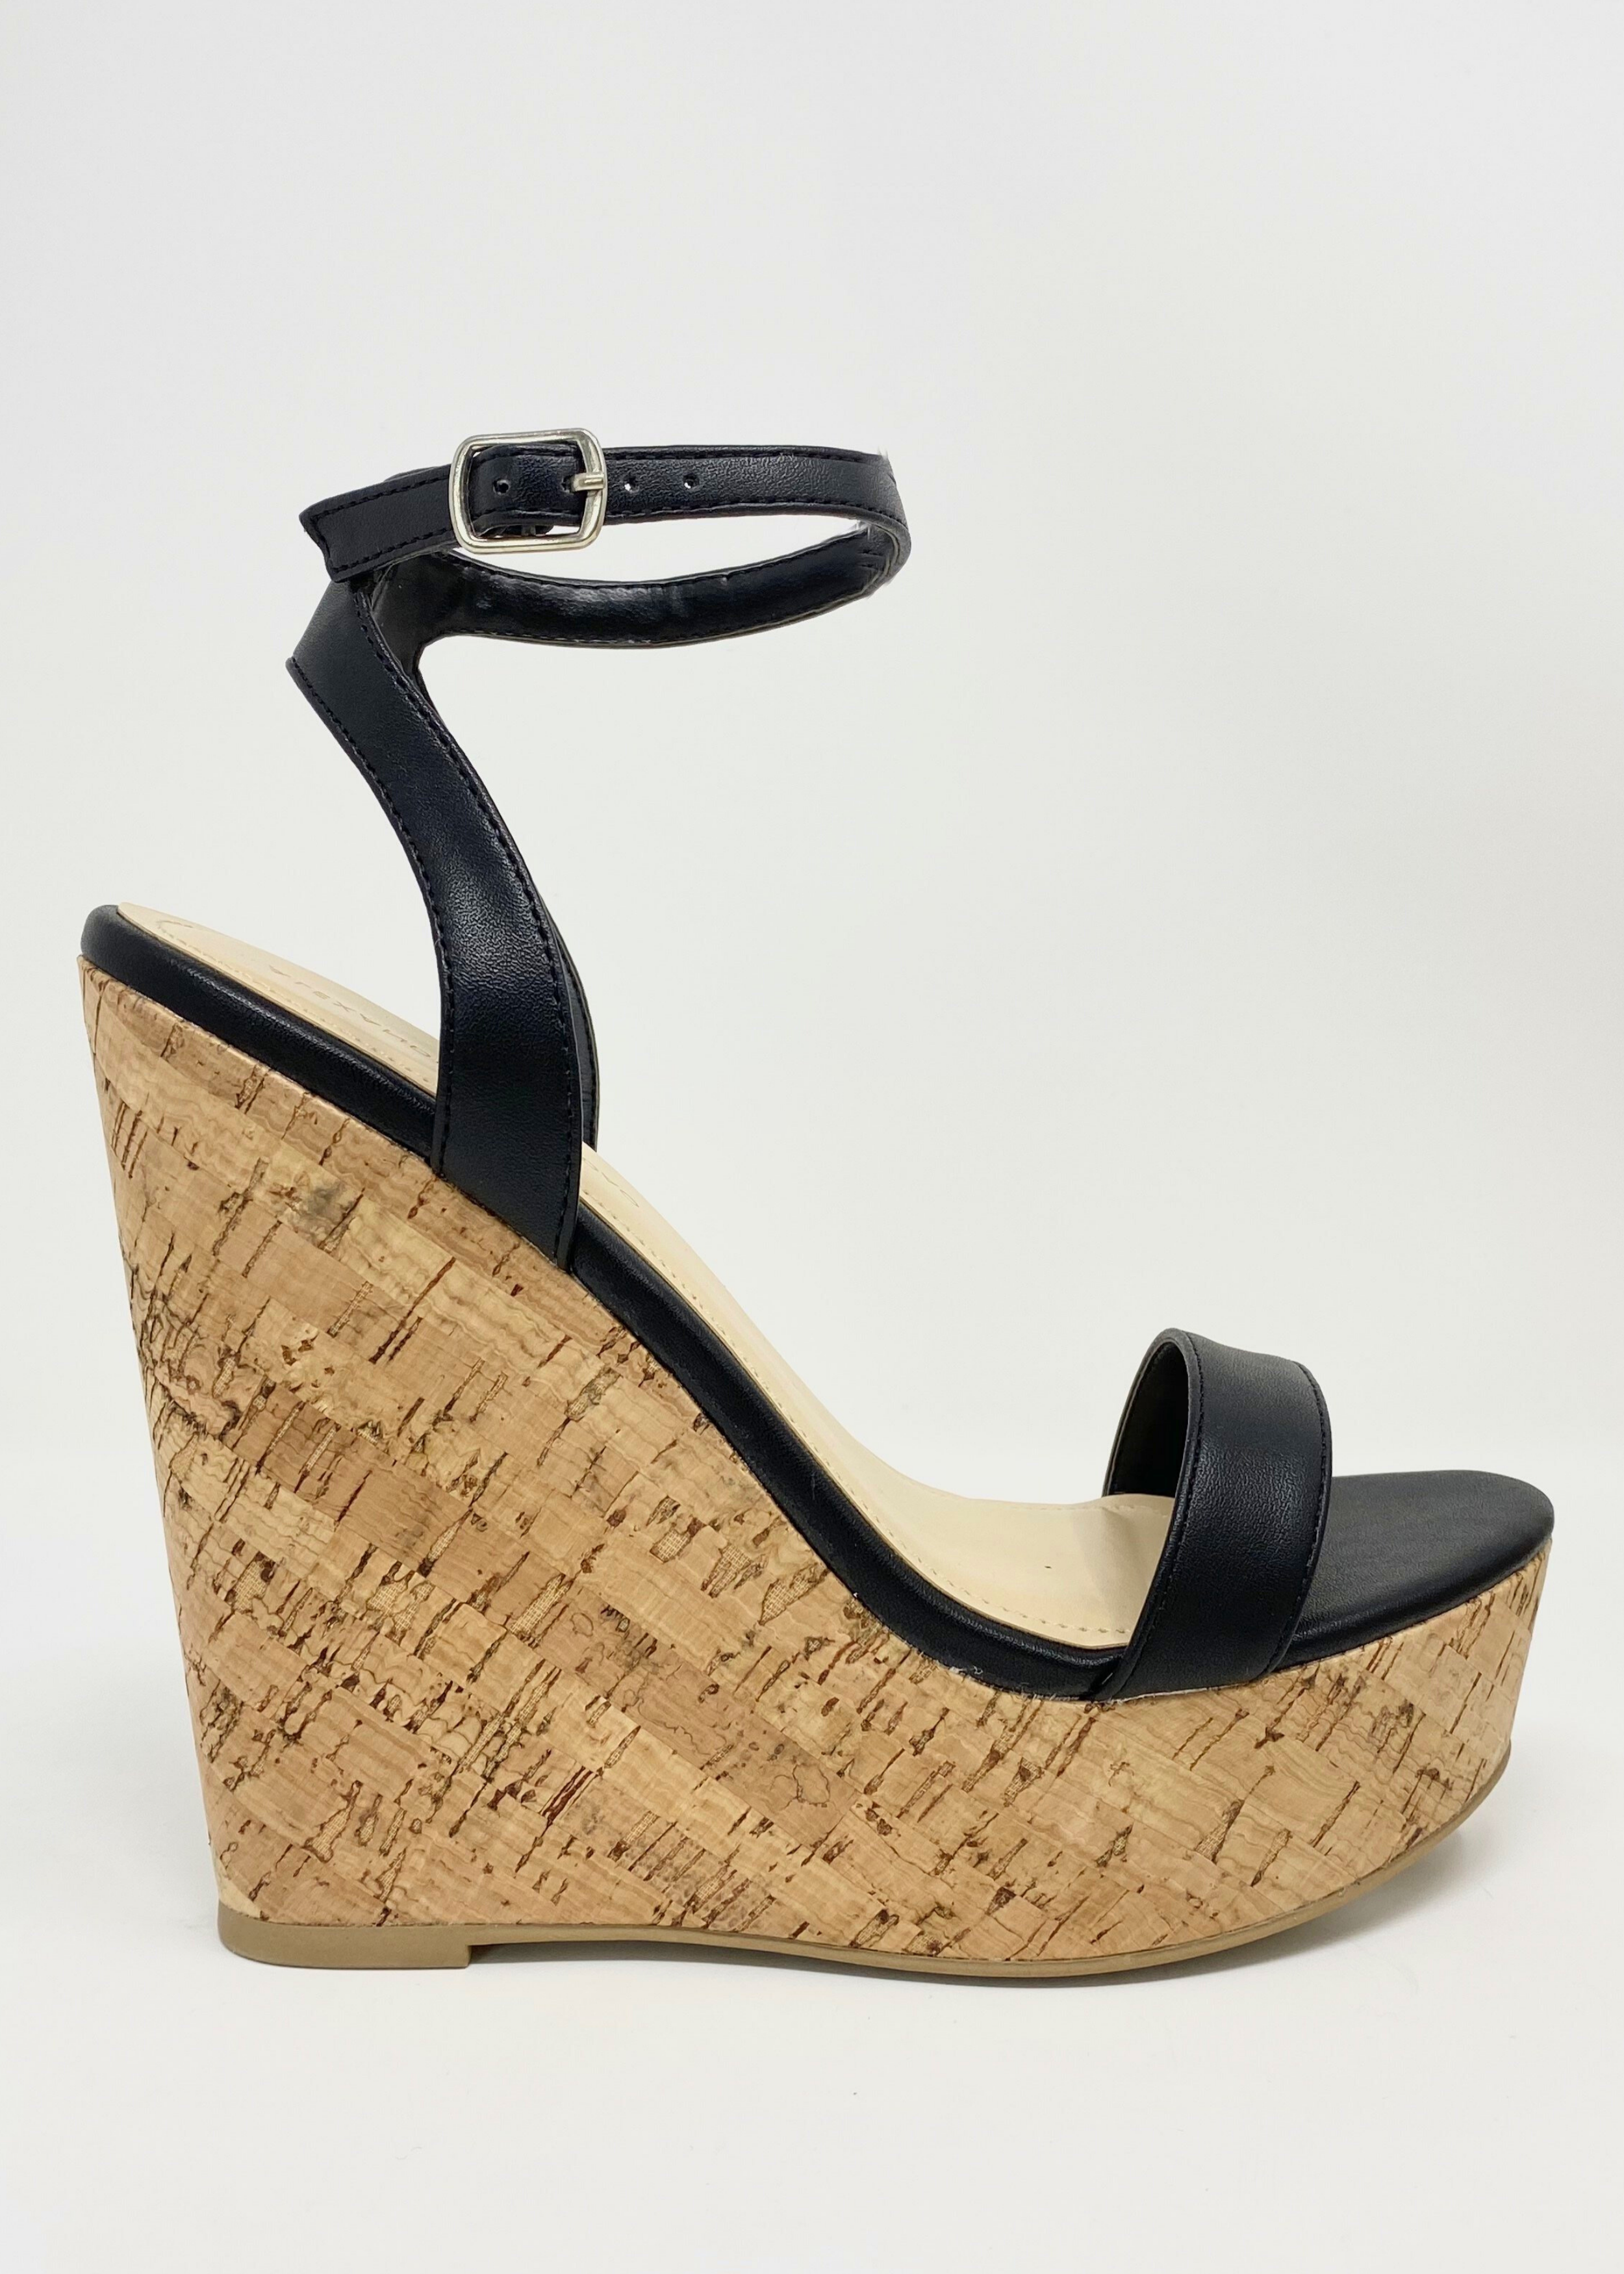 Women's black cork wedge! women's black wedge, Amora wedge by Alexandria Brandao Shoes.